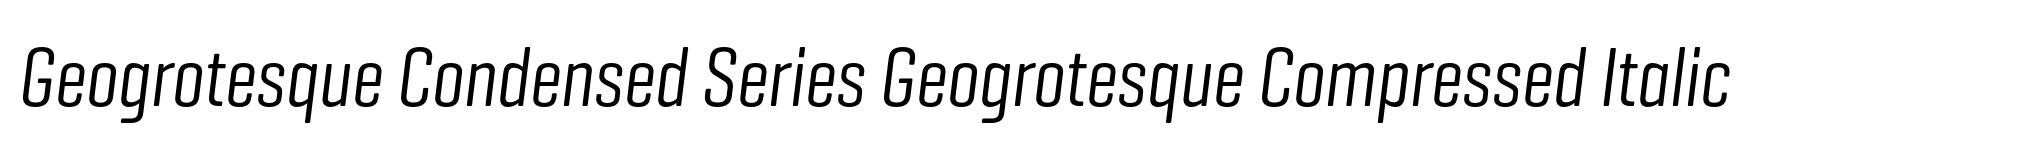 Geogrotesque Condensed Series Geogrotesque Compressed Italic image